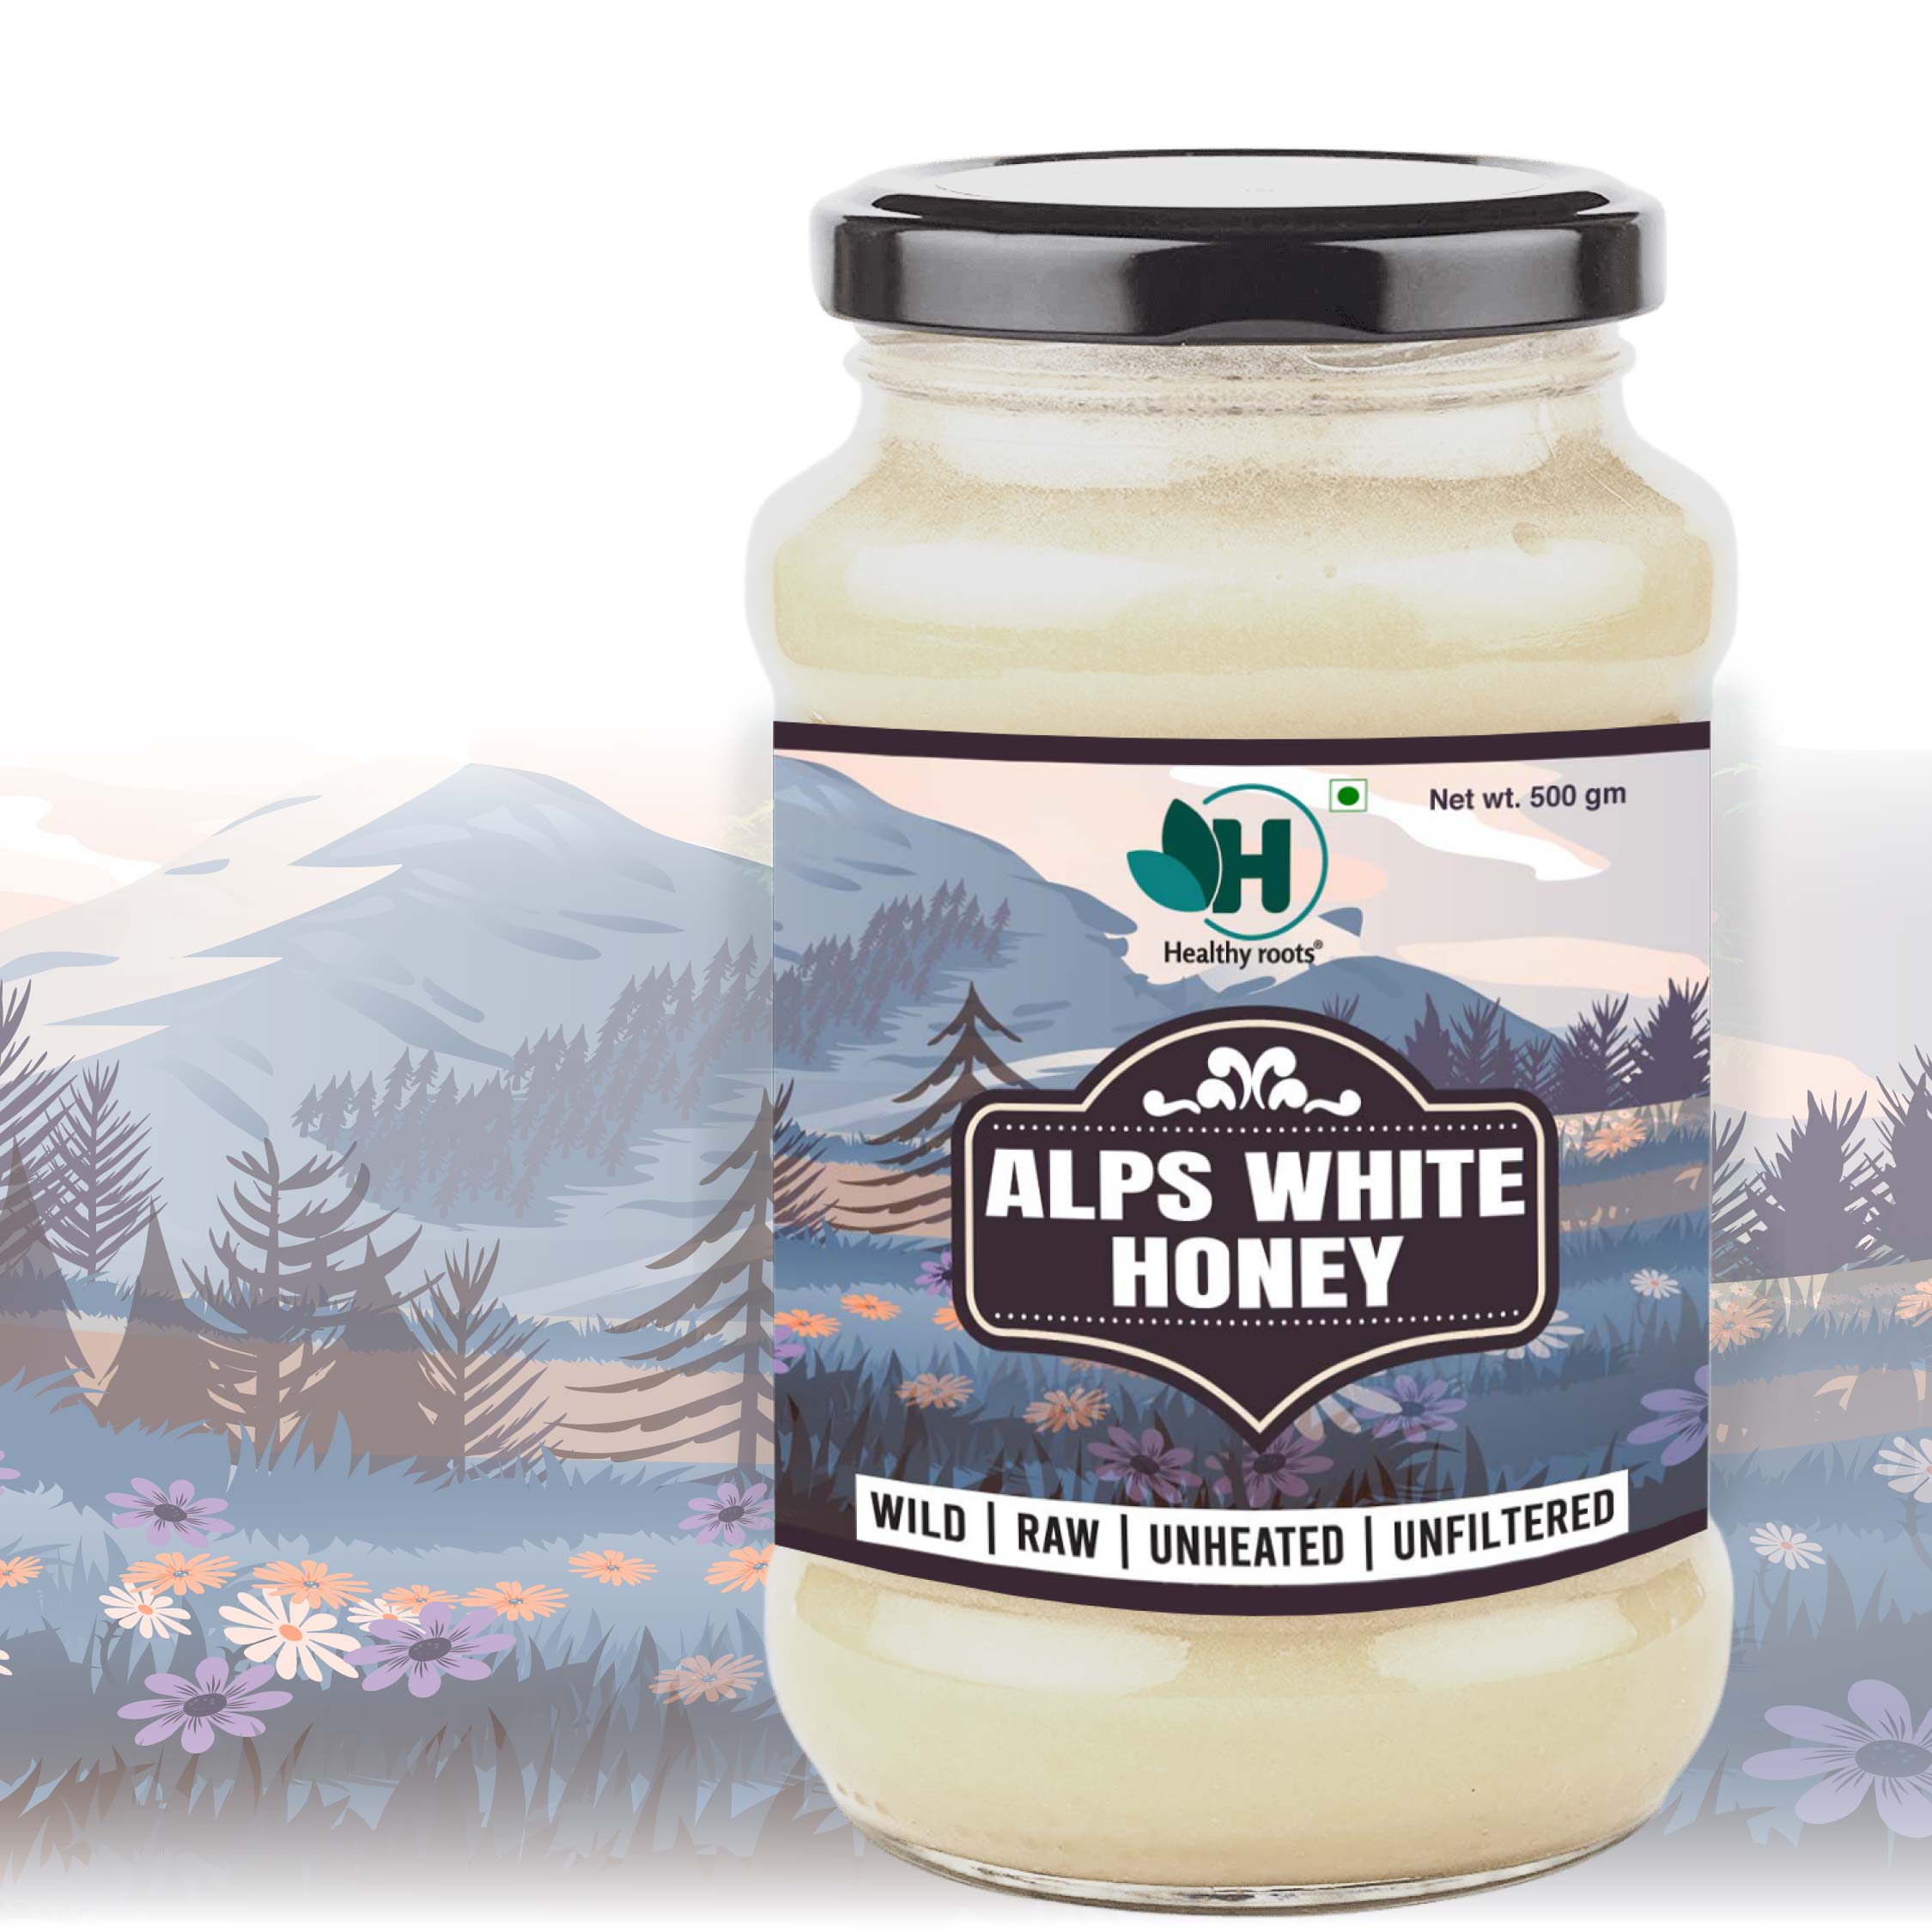 Alps White Honey